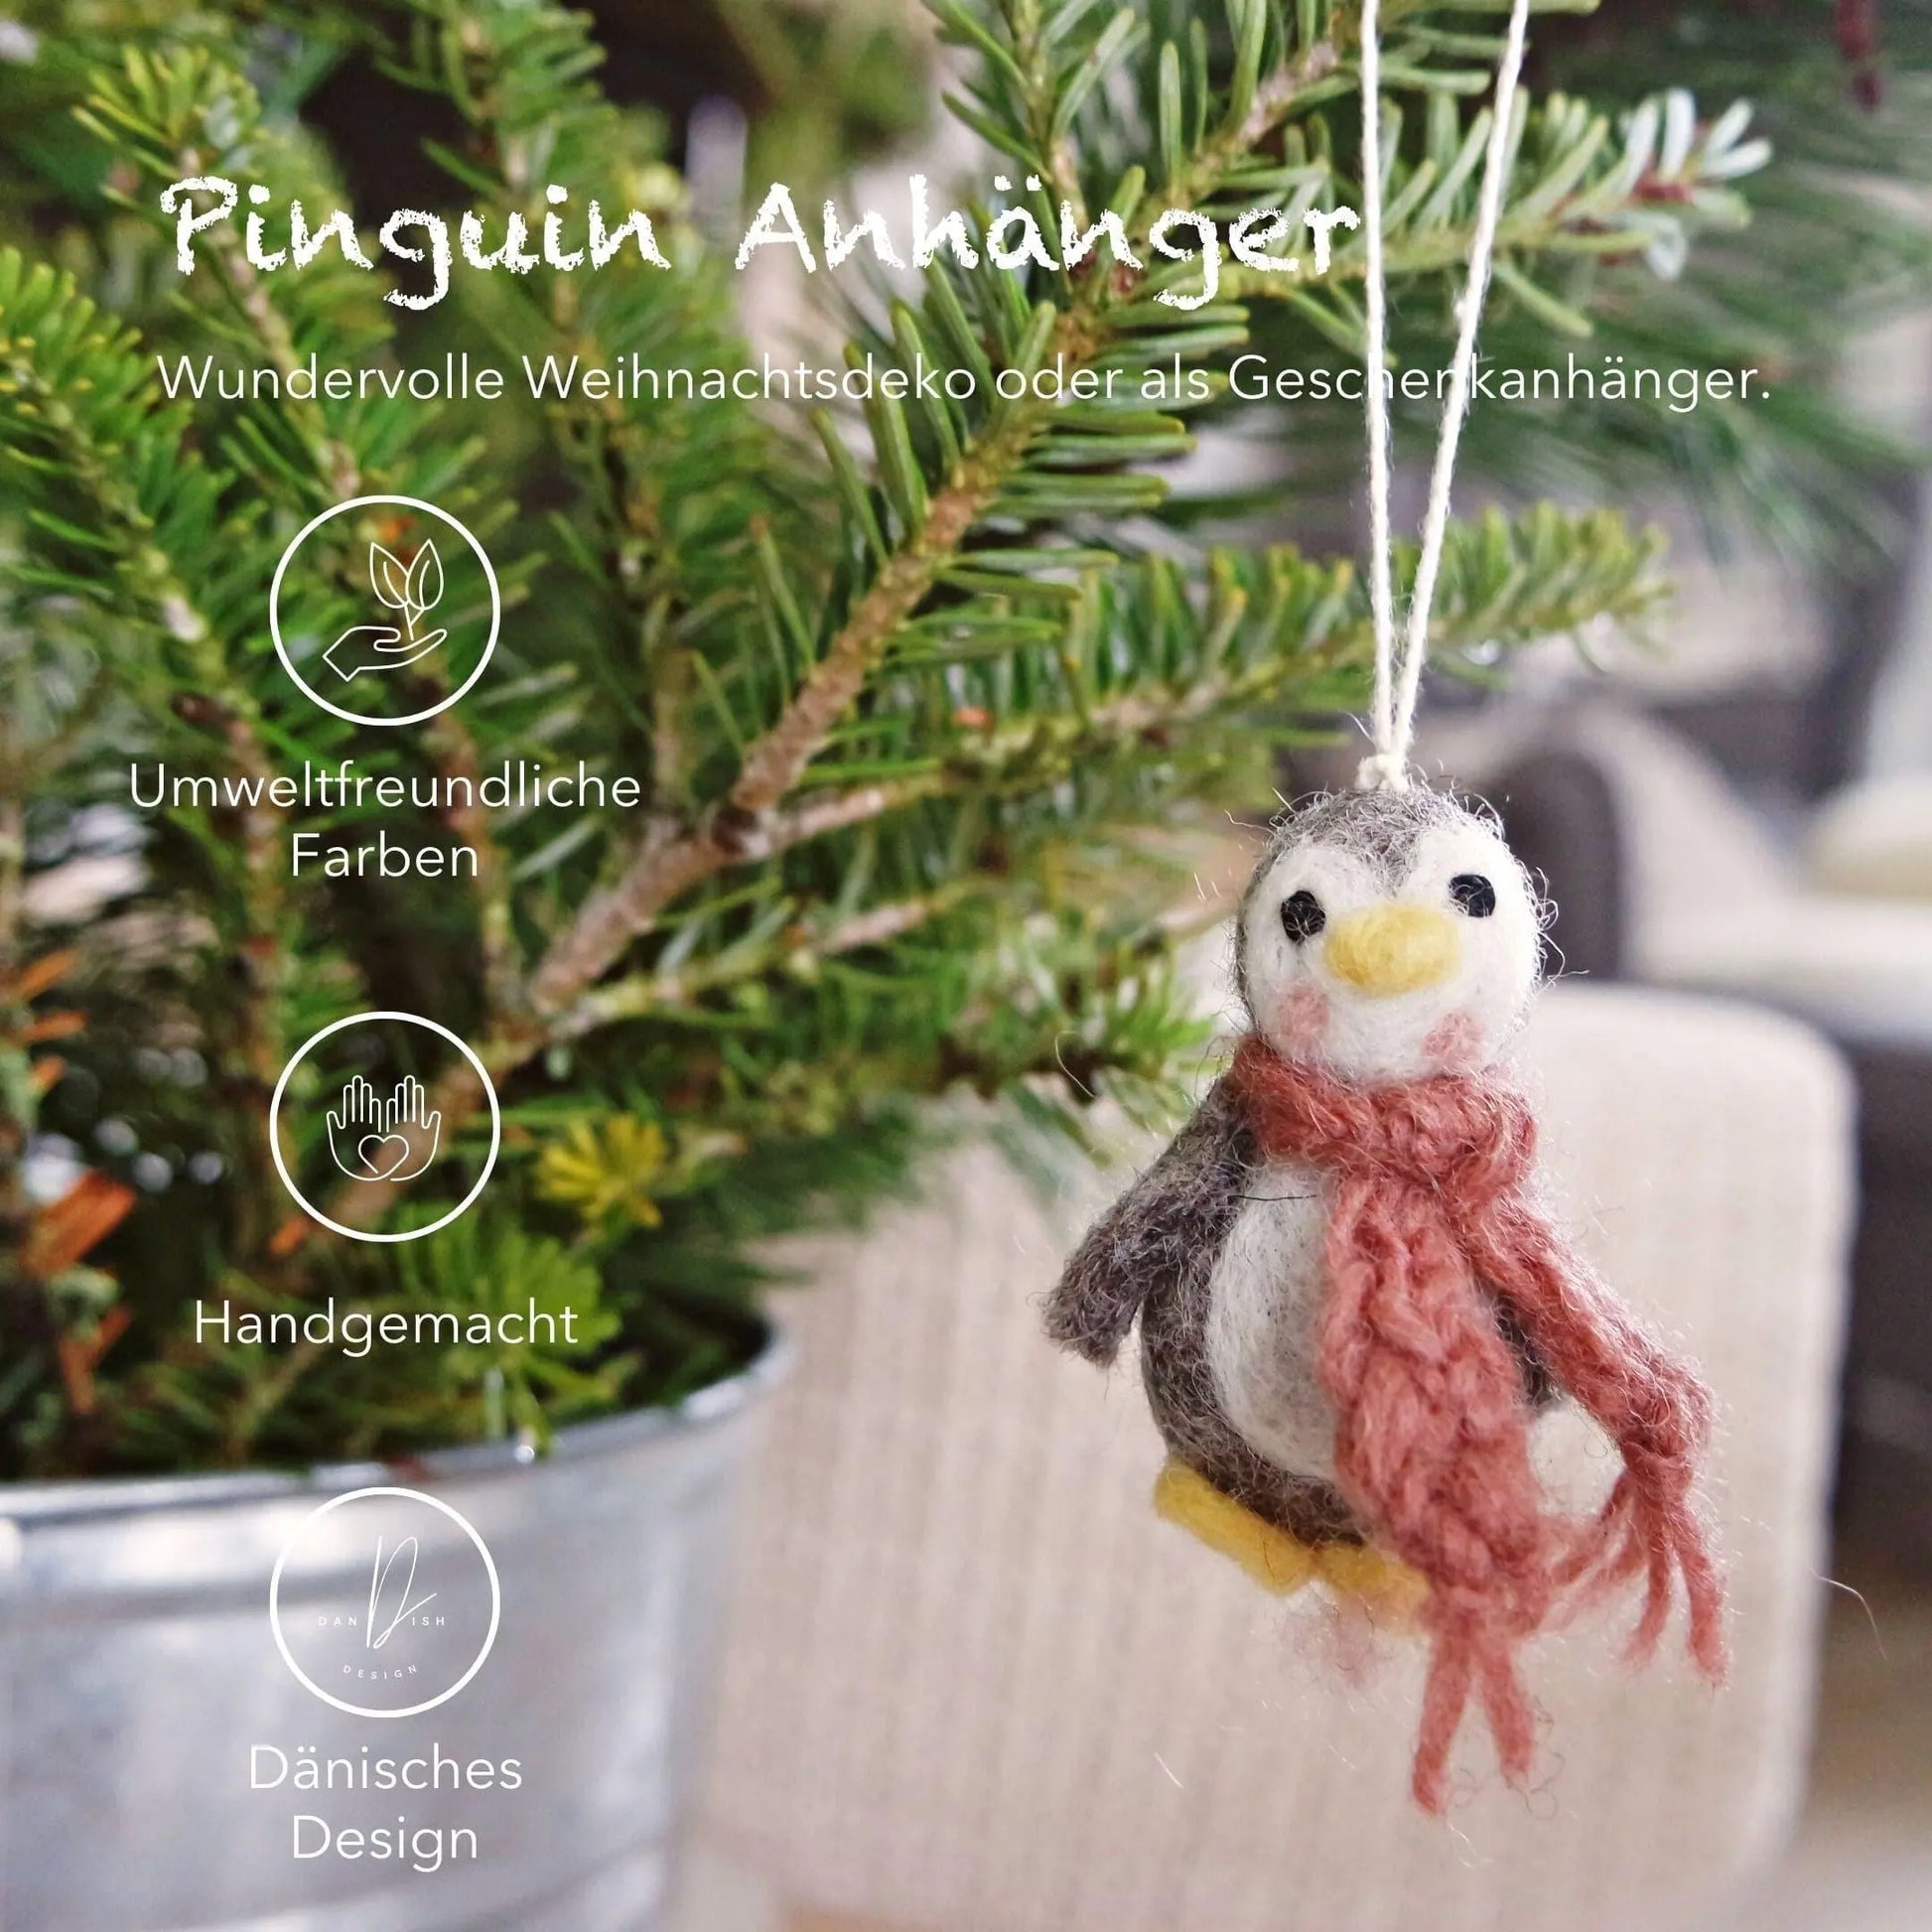 Gry & süße 3er Filz Anhänger – Weihnachtsschmuck aus Sif Pinguine Filzlig Set